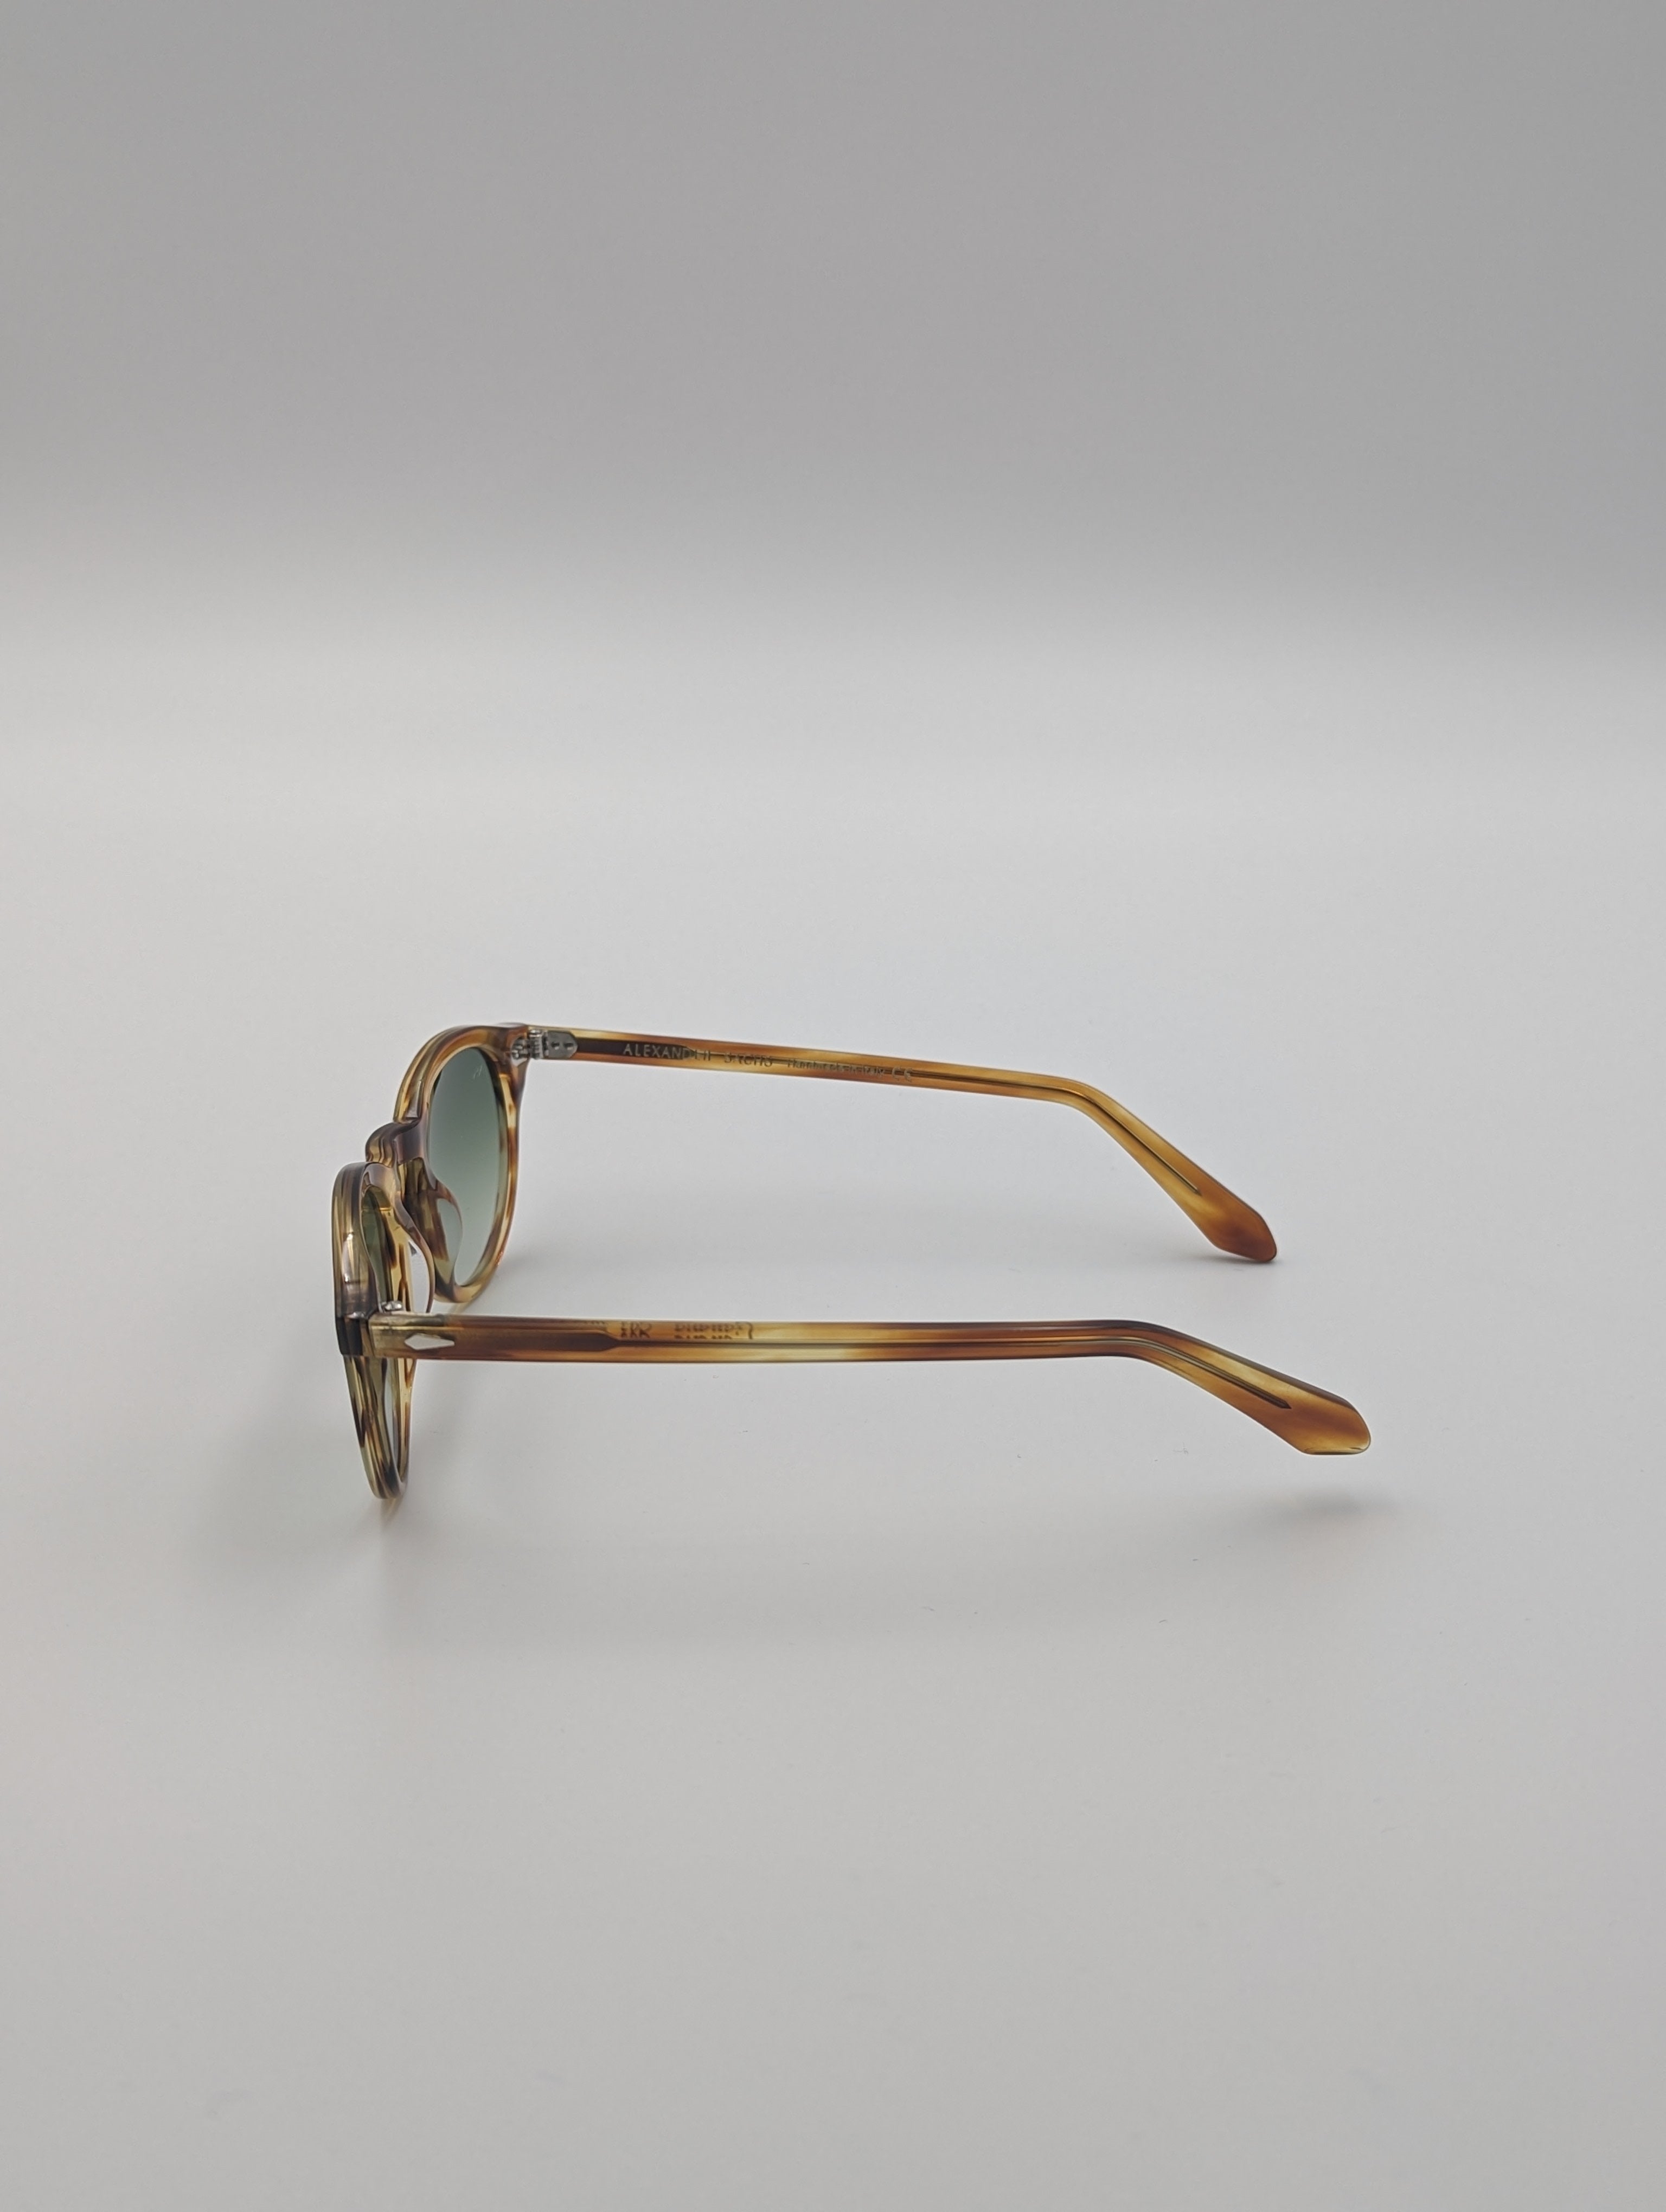 Sunglasses Iconic Tortoiseshell - Caramel